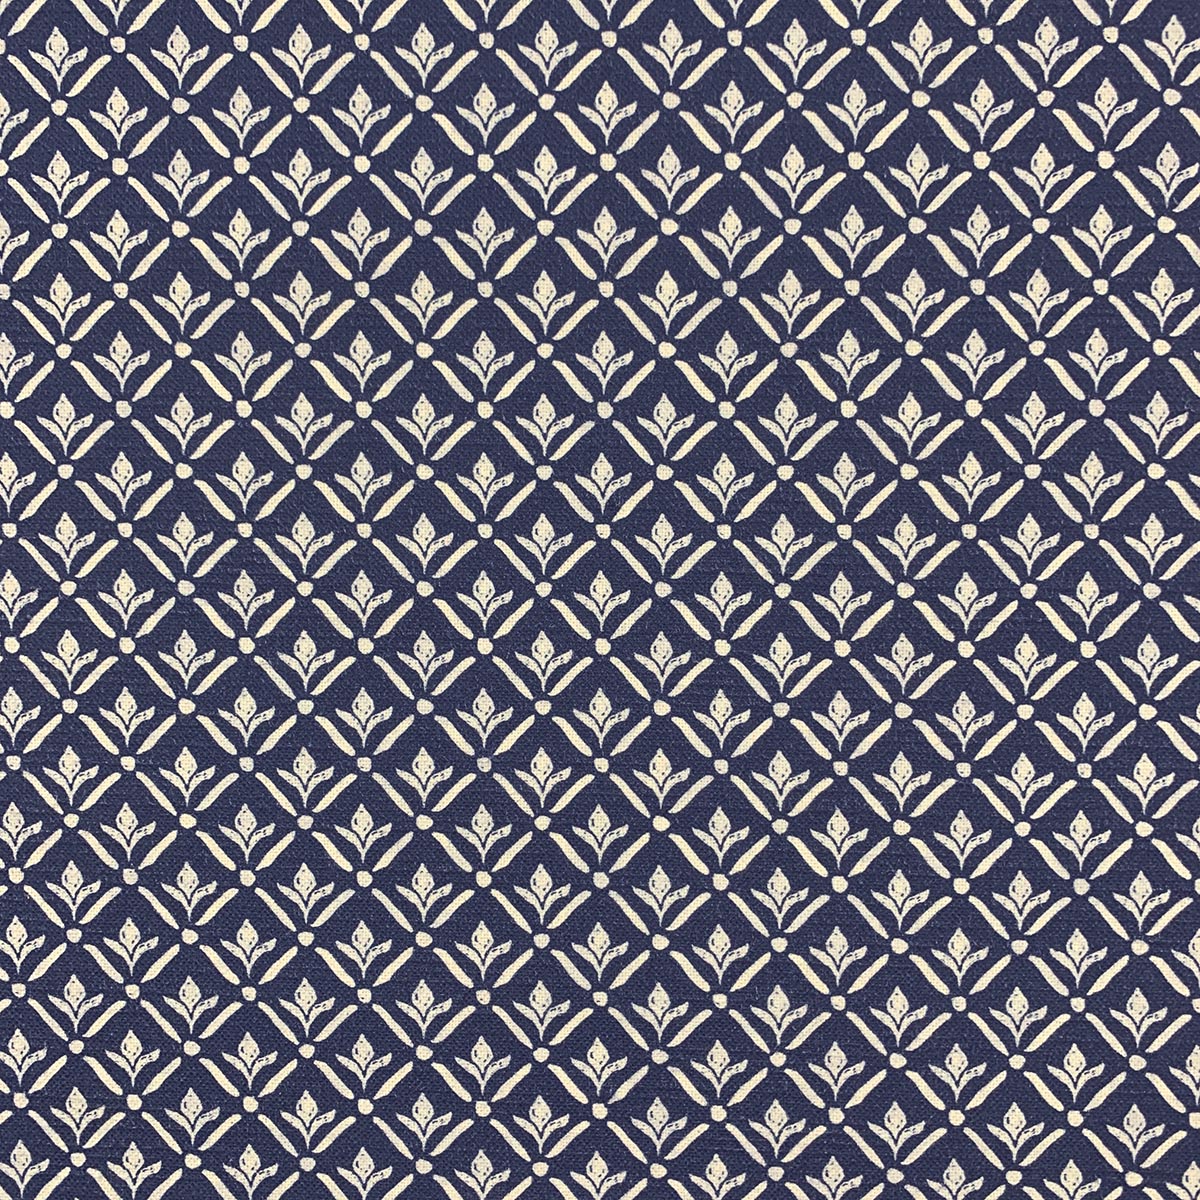 Purchase Mag FabricItem 11442 pattern name Lillian August Dinah Santorini